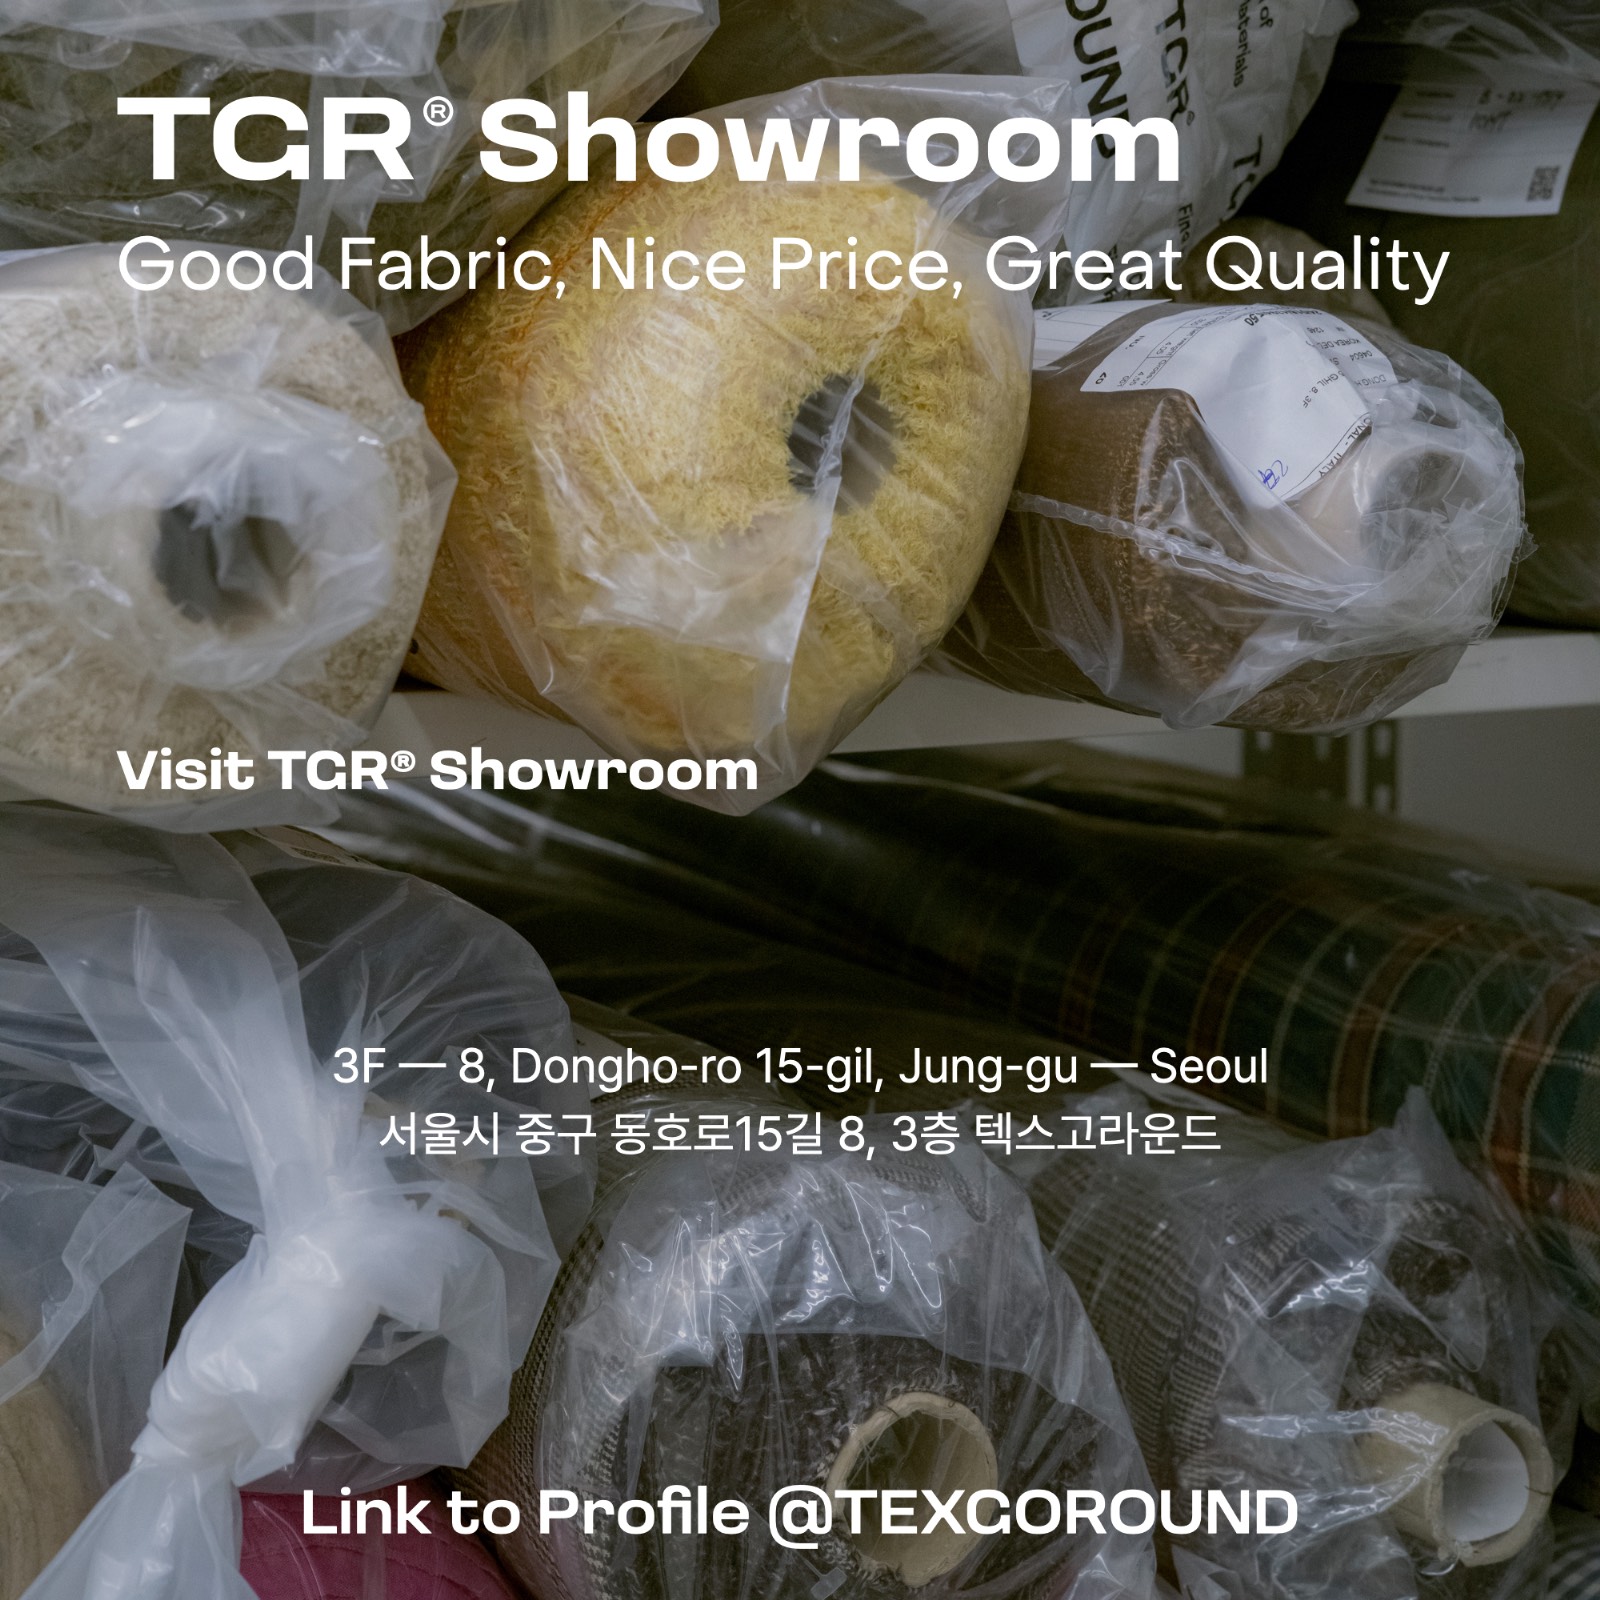 Visit TGR® Showroom - Good Fabric, Nice Price, Great Quality